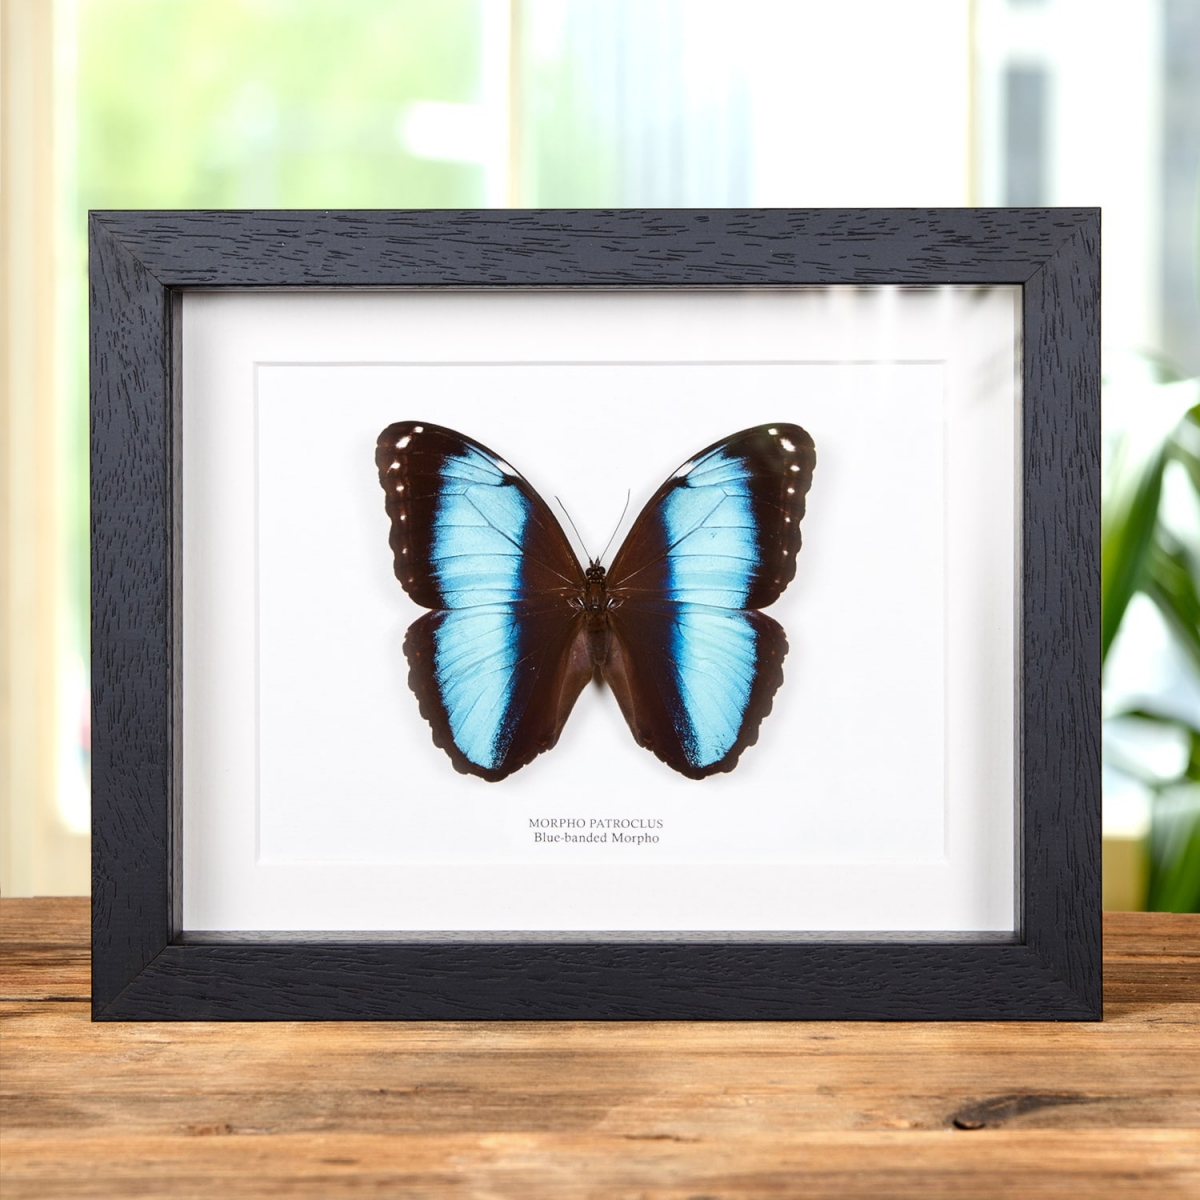 Minibeast Blue-banded Morpho Butterfly in Box Frame (Morpho patroclus)